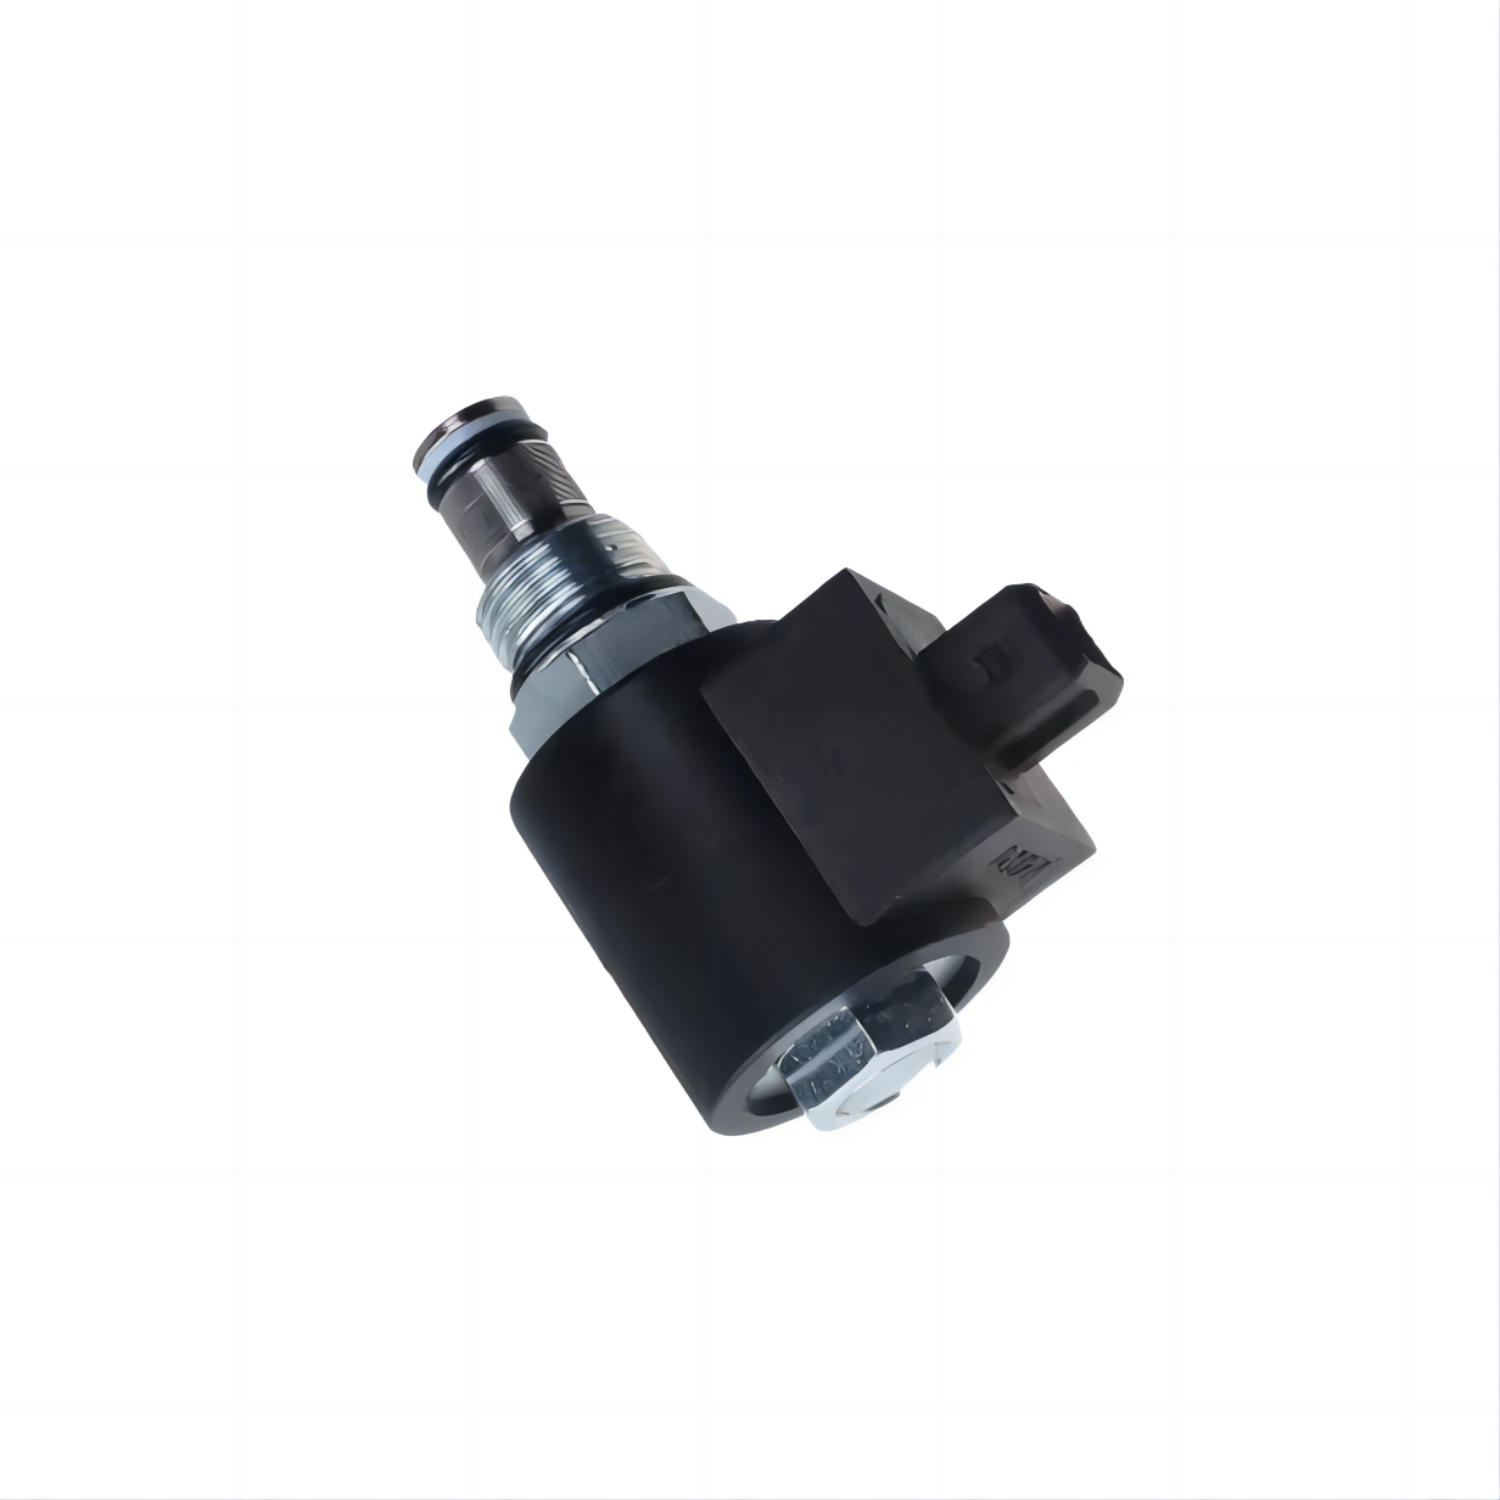 Excavator solenoid valve hydraulic pompo 12V 25/974628 e entsoeng ka cartridge valve Hydraulic valve